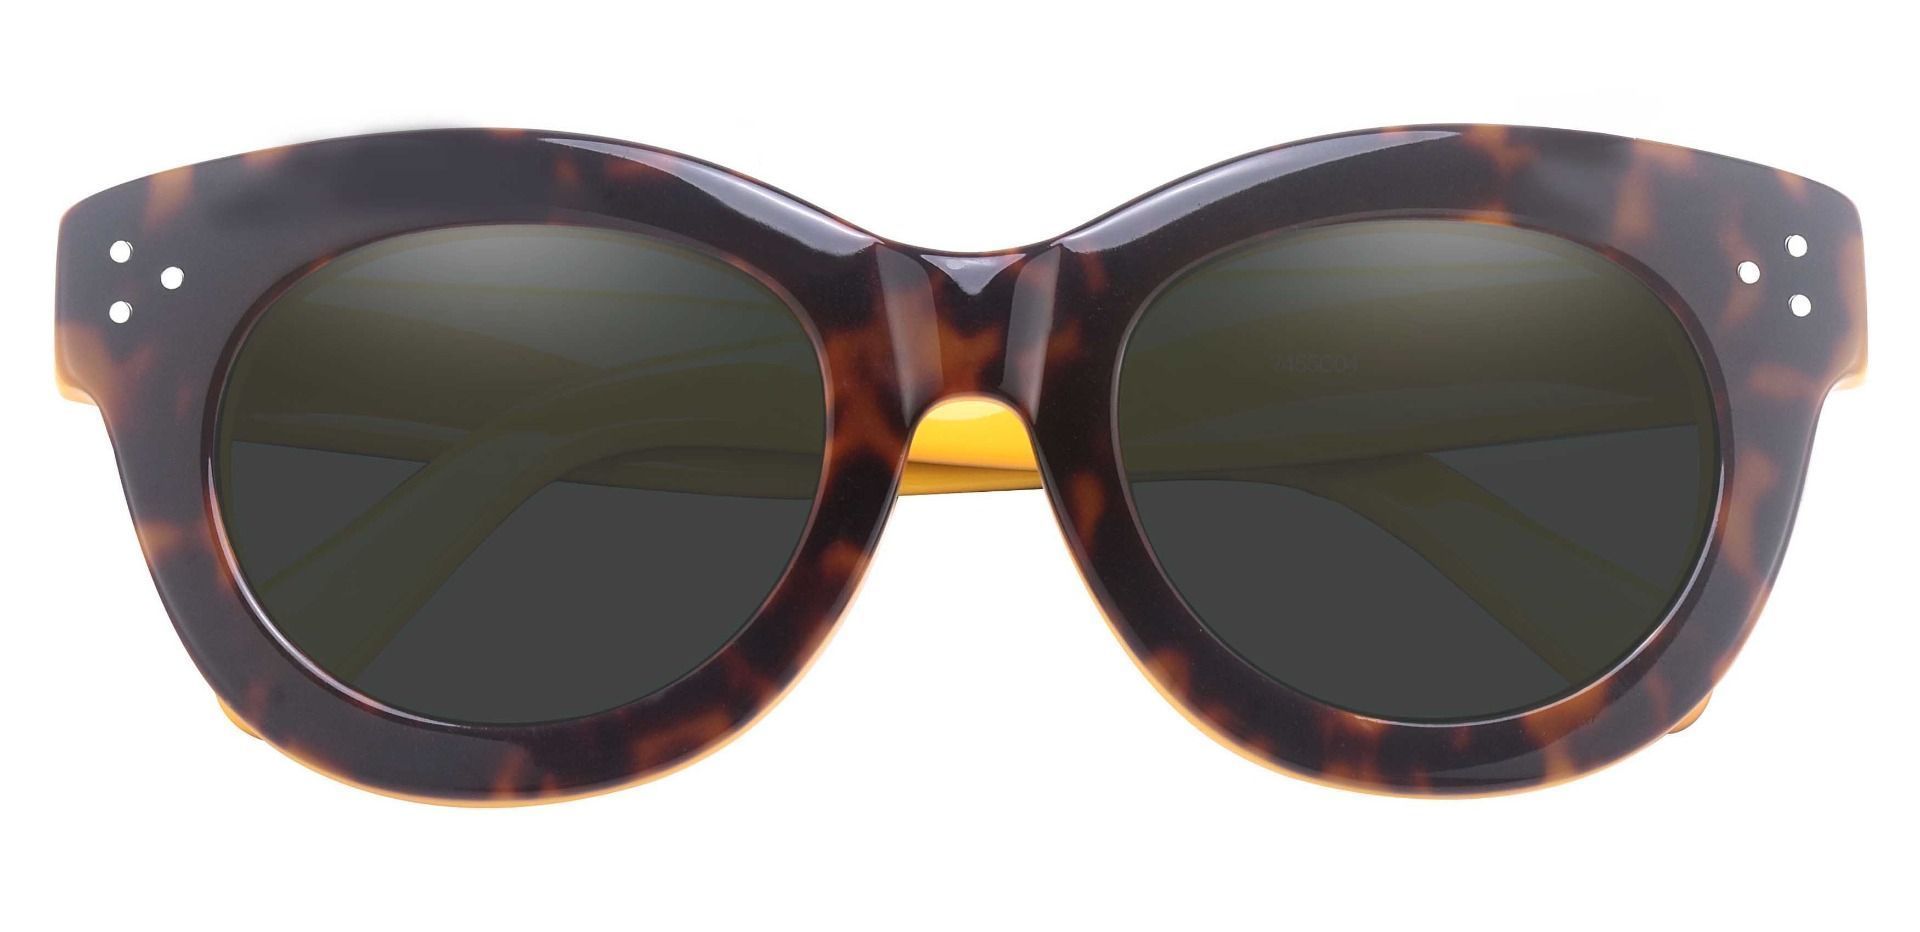 Corrigan Cat Eye Prescription Sunglasses - Tortoise Frame With Gray ...